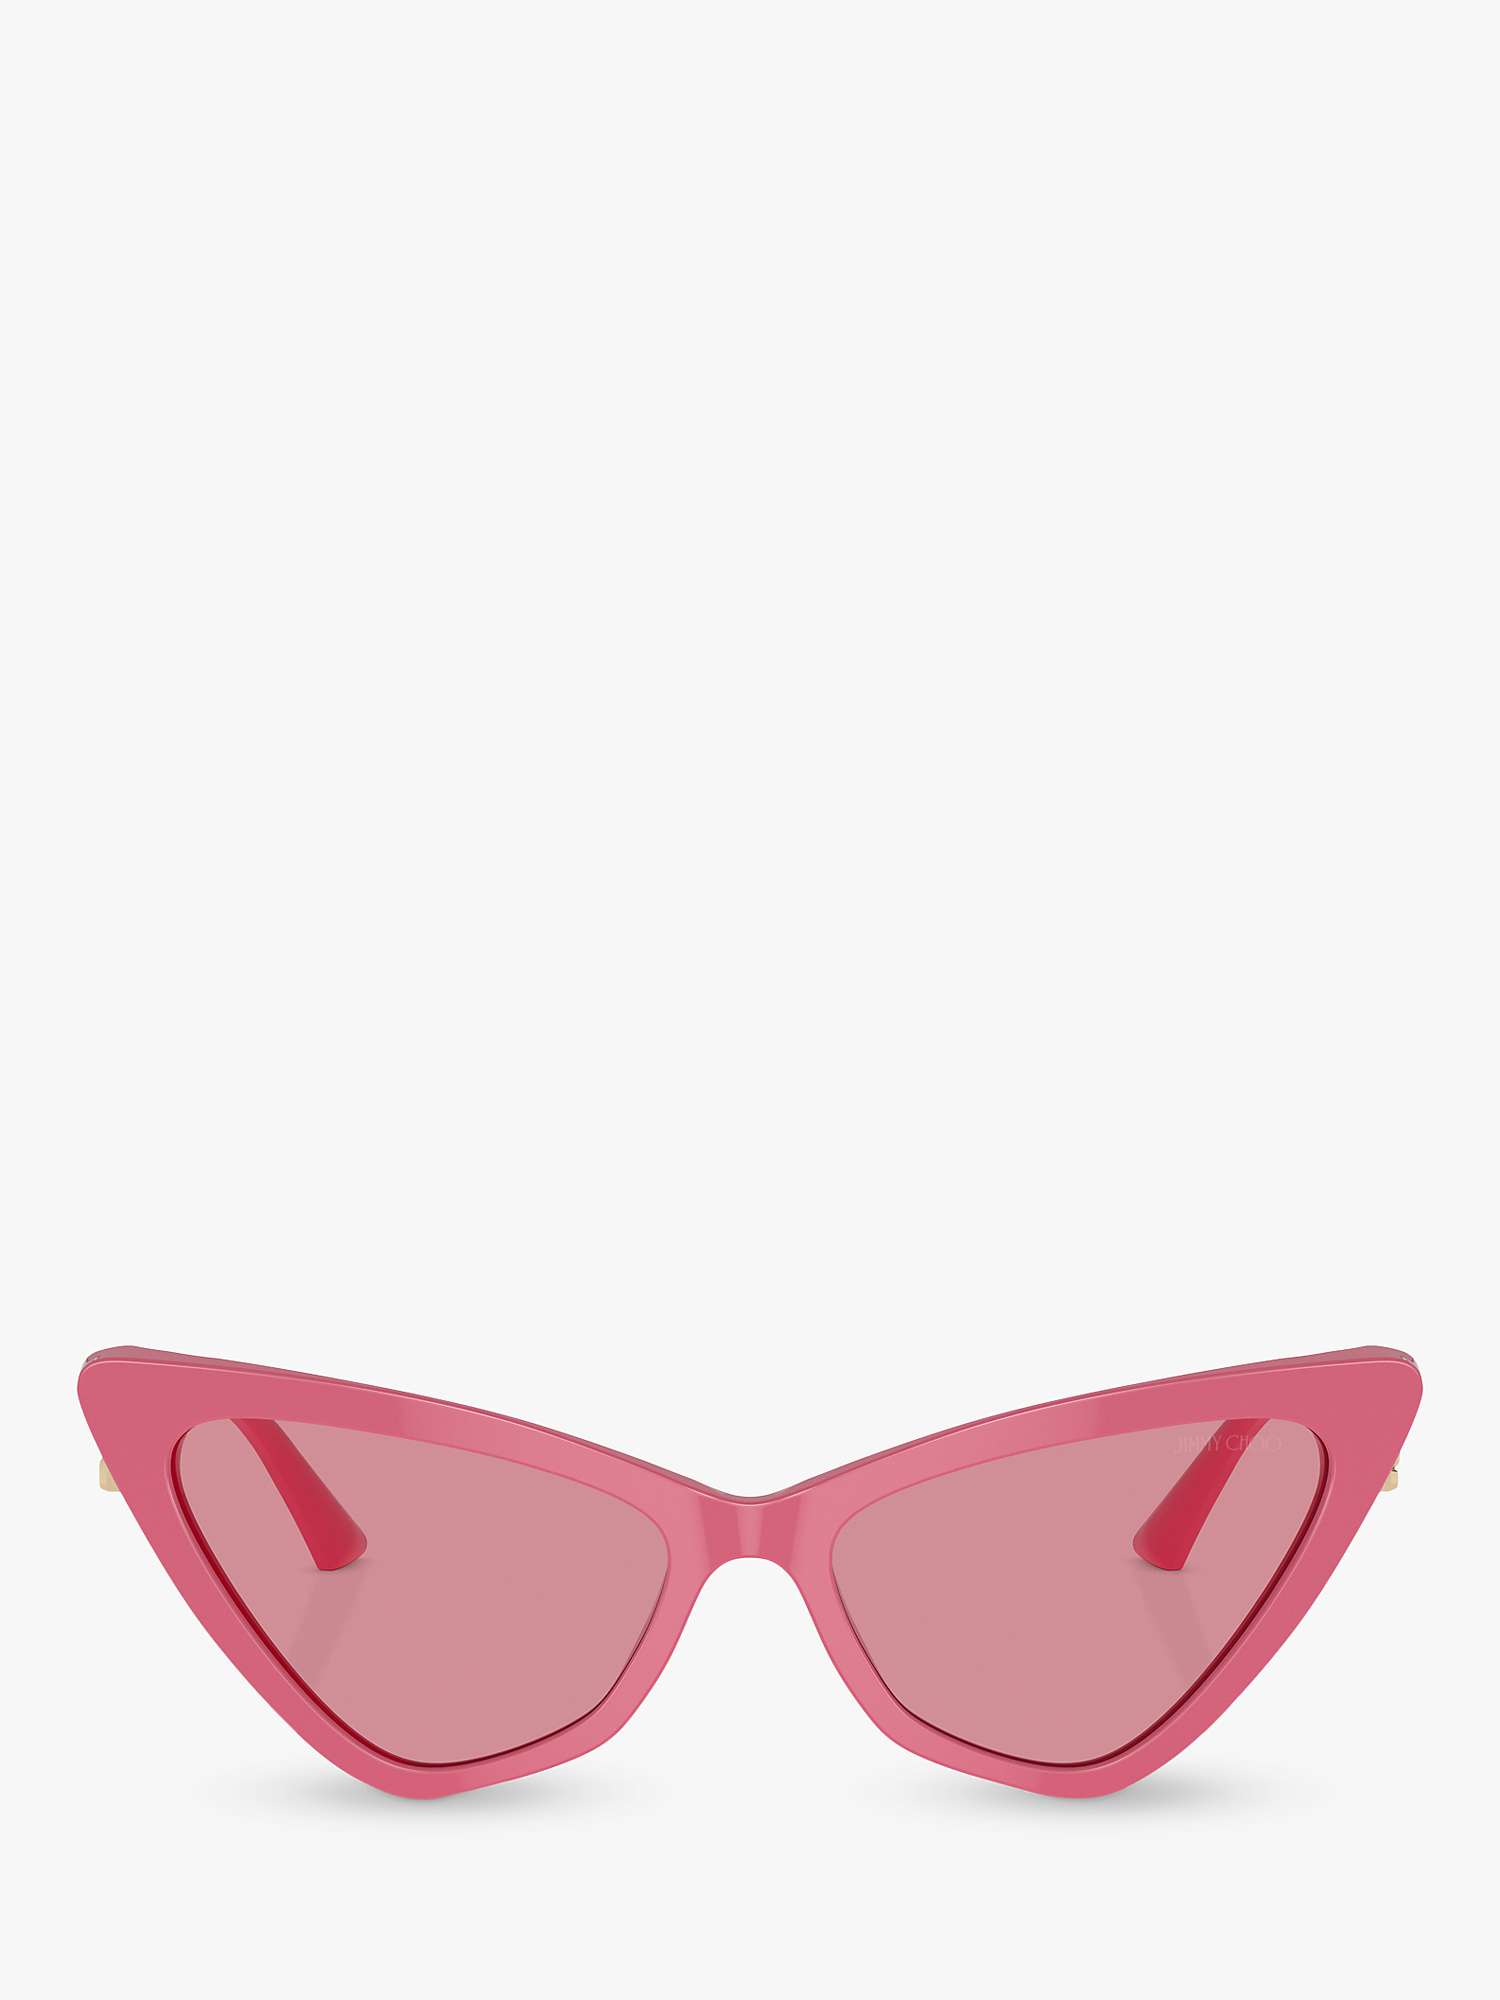 Buy Jimmy Choo JC5008 Women's Cat's Eye Sunglasses, Pink Online at johnlewis.com